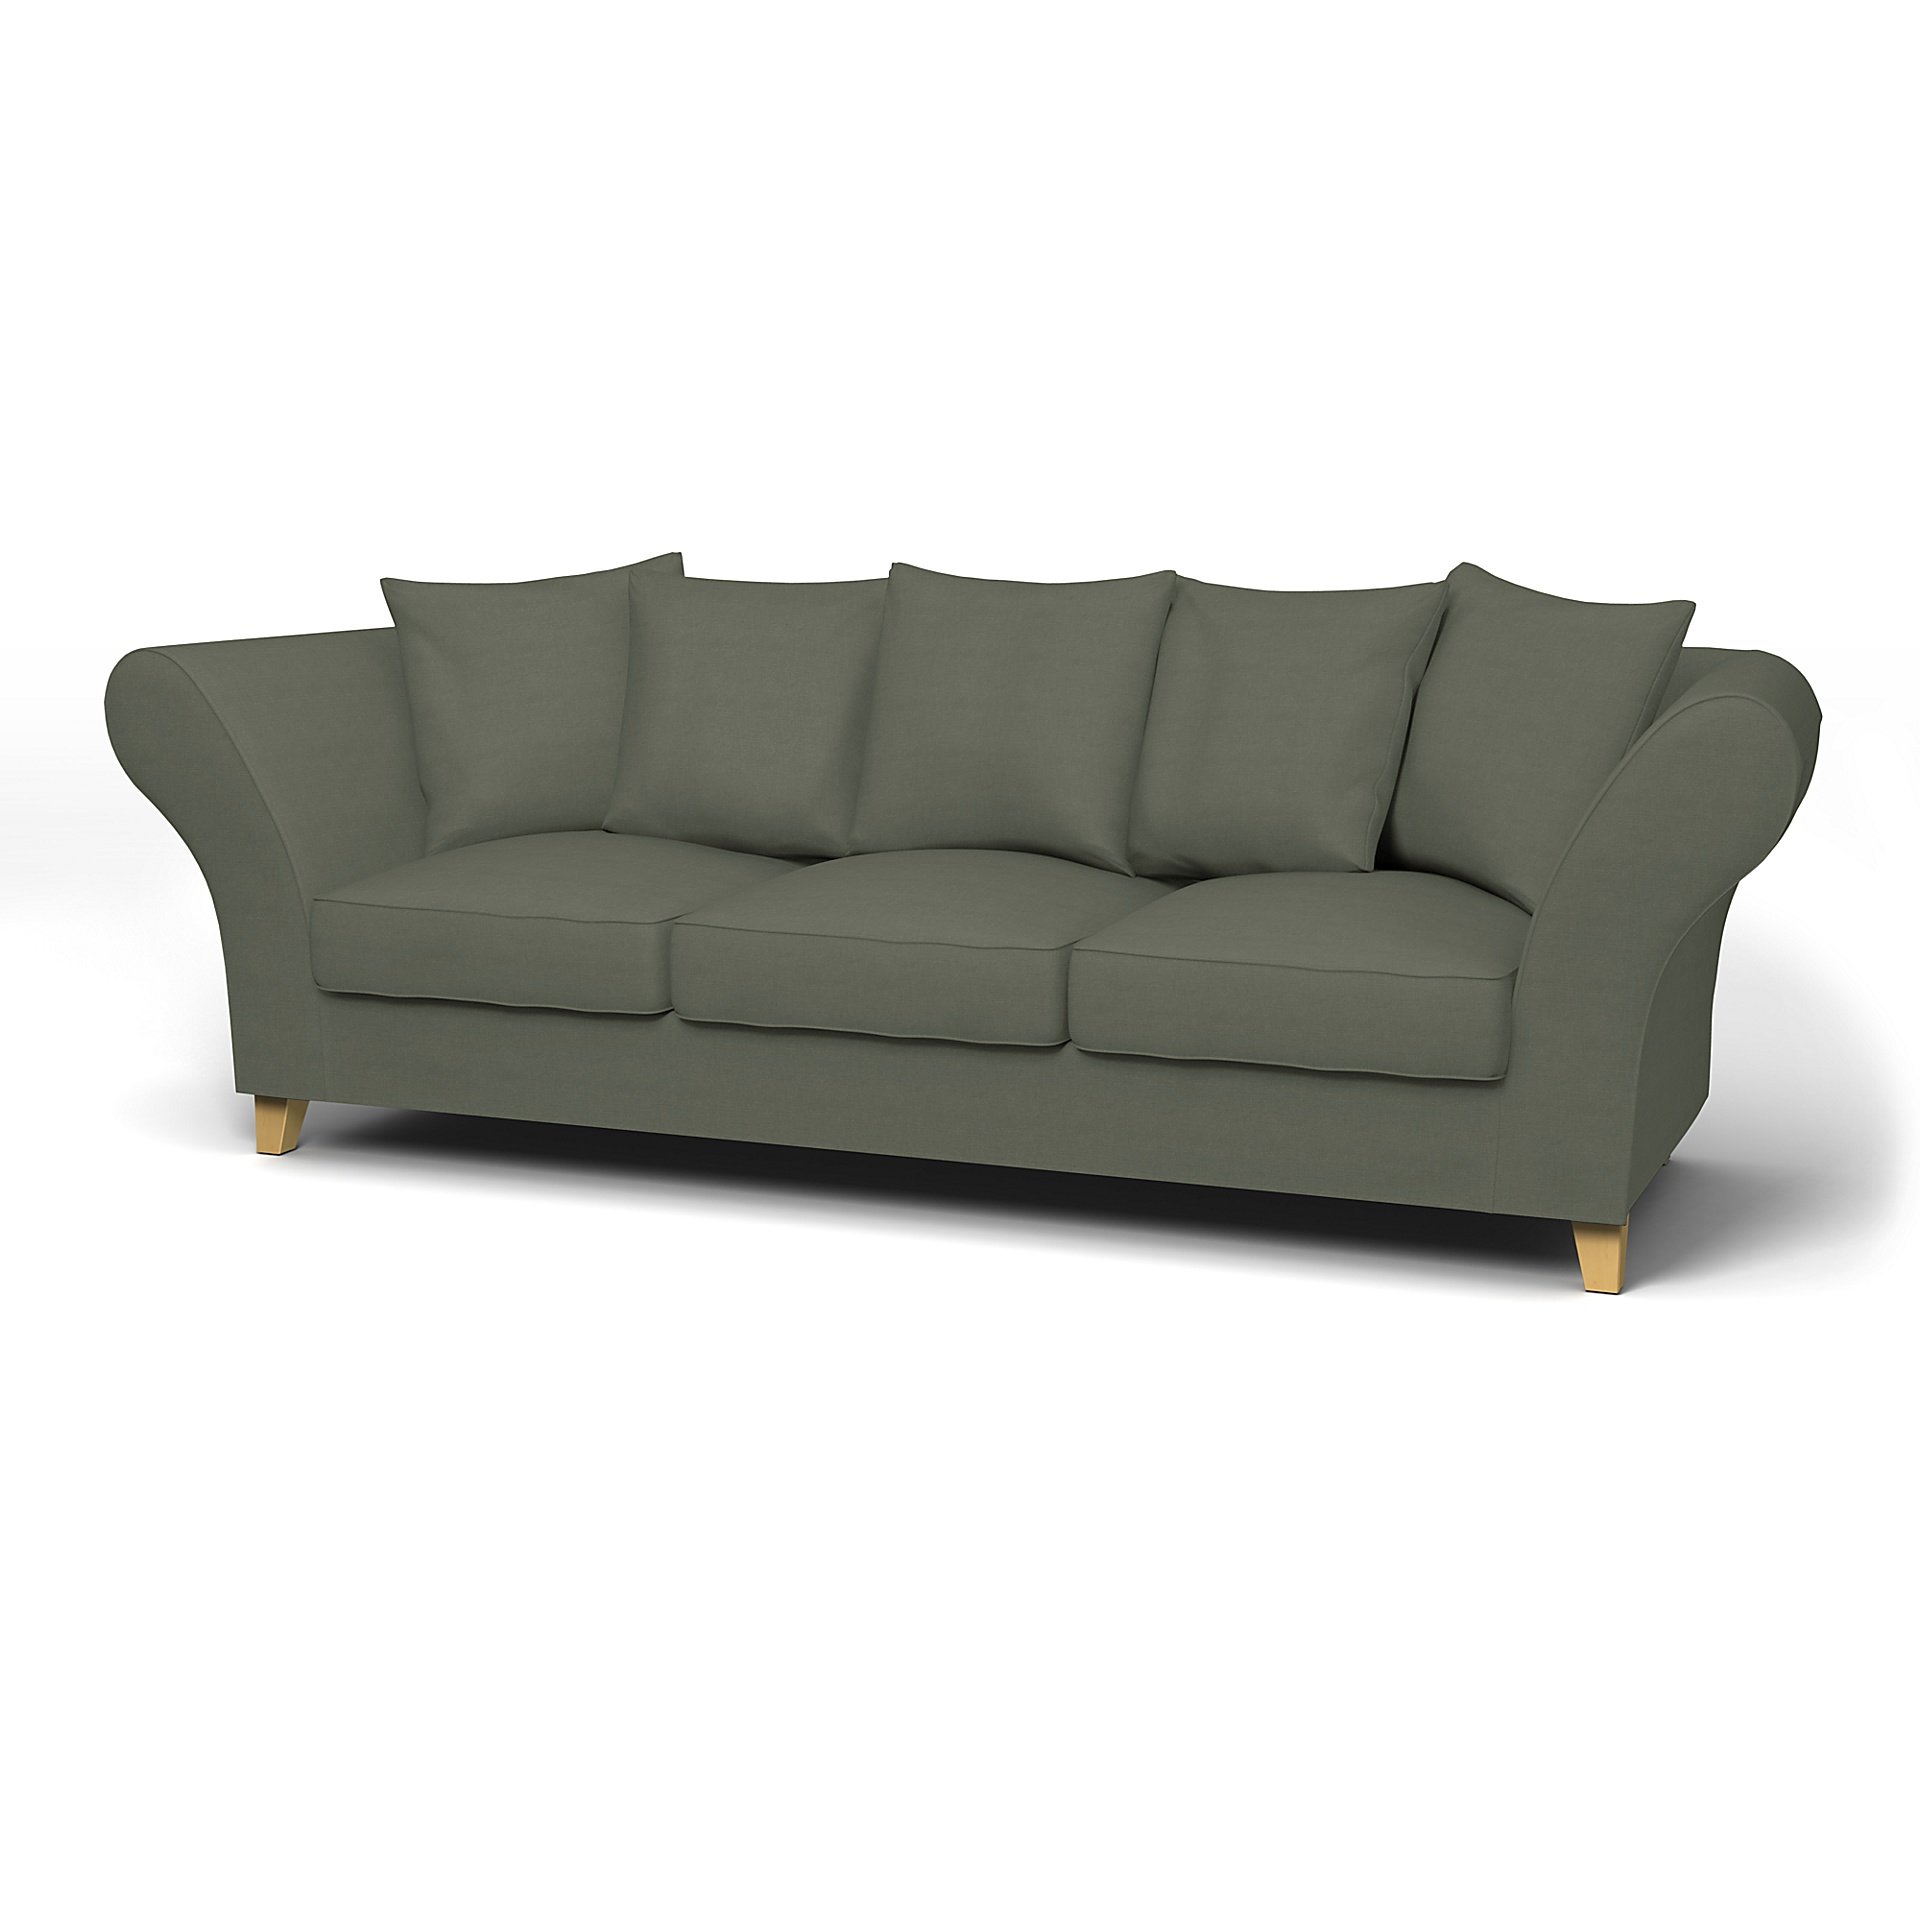 IKEA - Backa 3.5 Seater Sofa Cover, Rosemary, Linen - Bemz